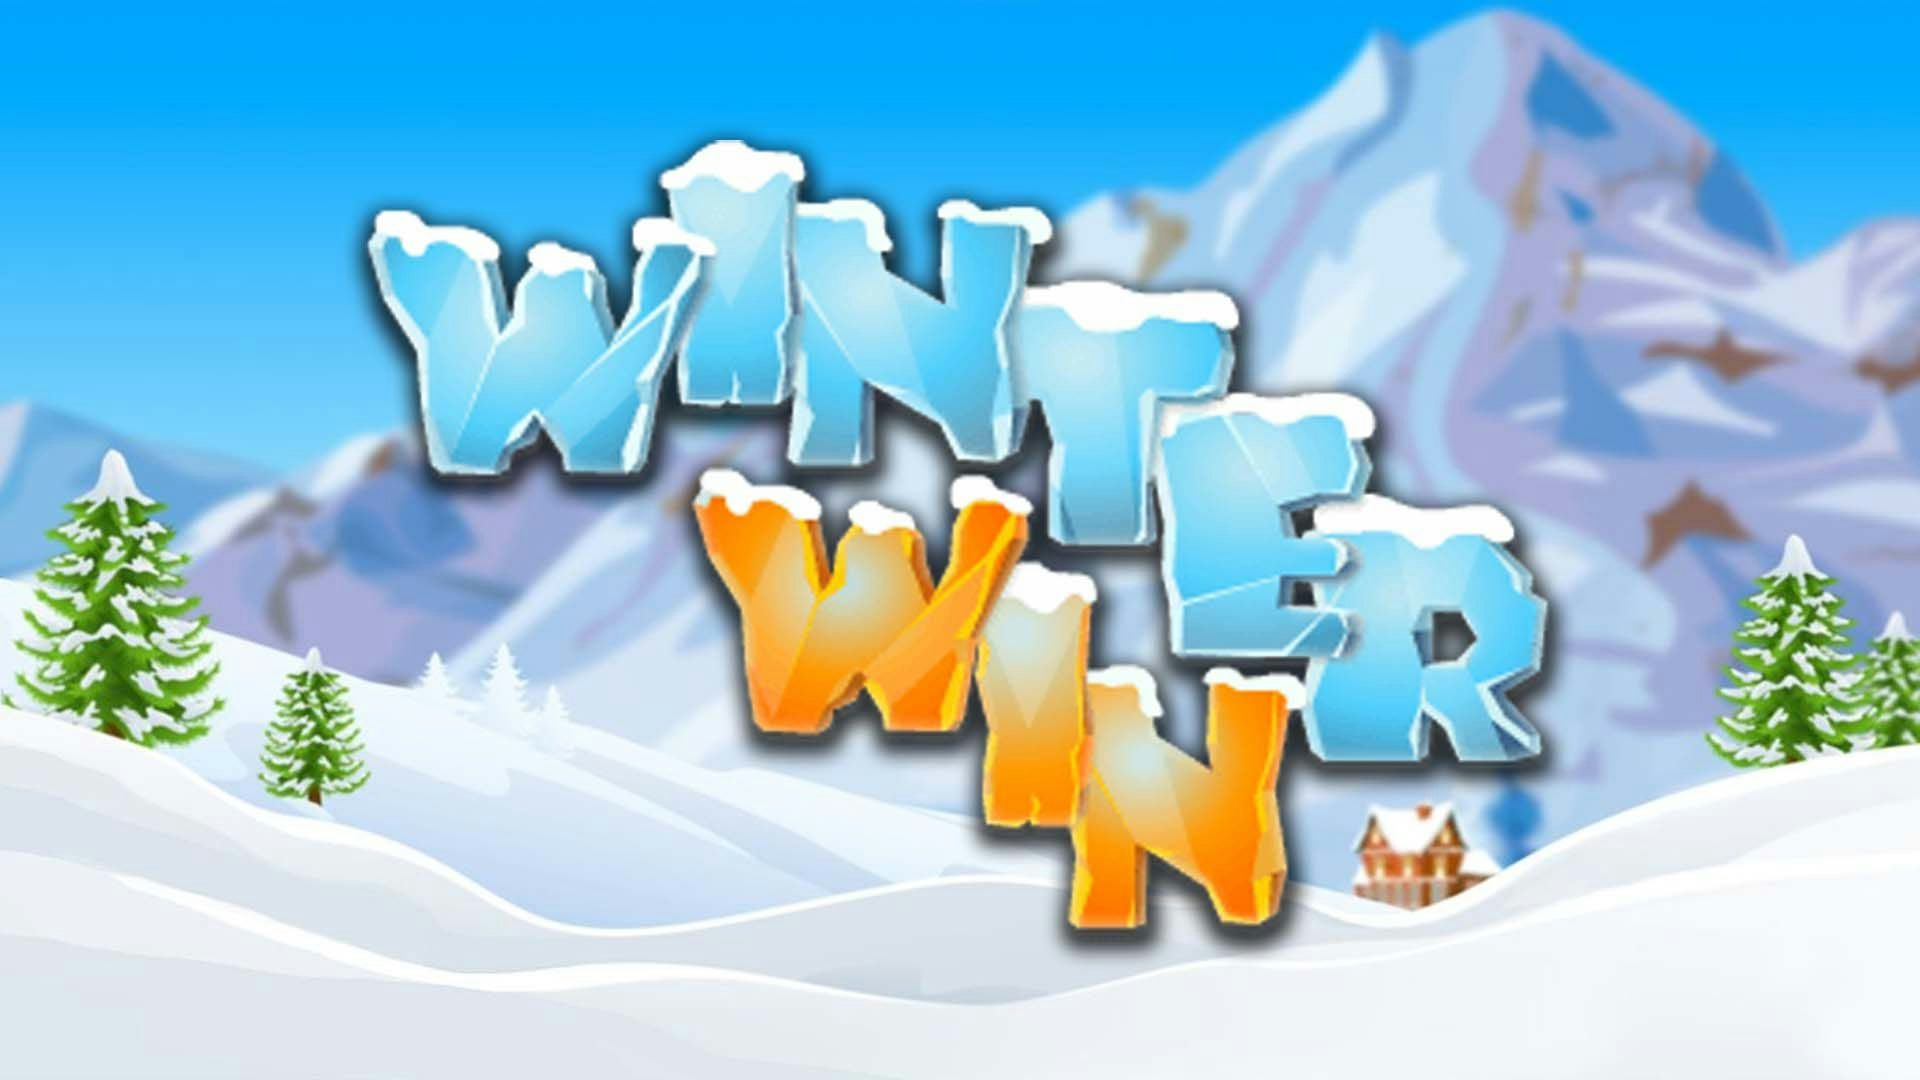 Winter Win